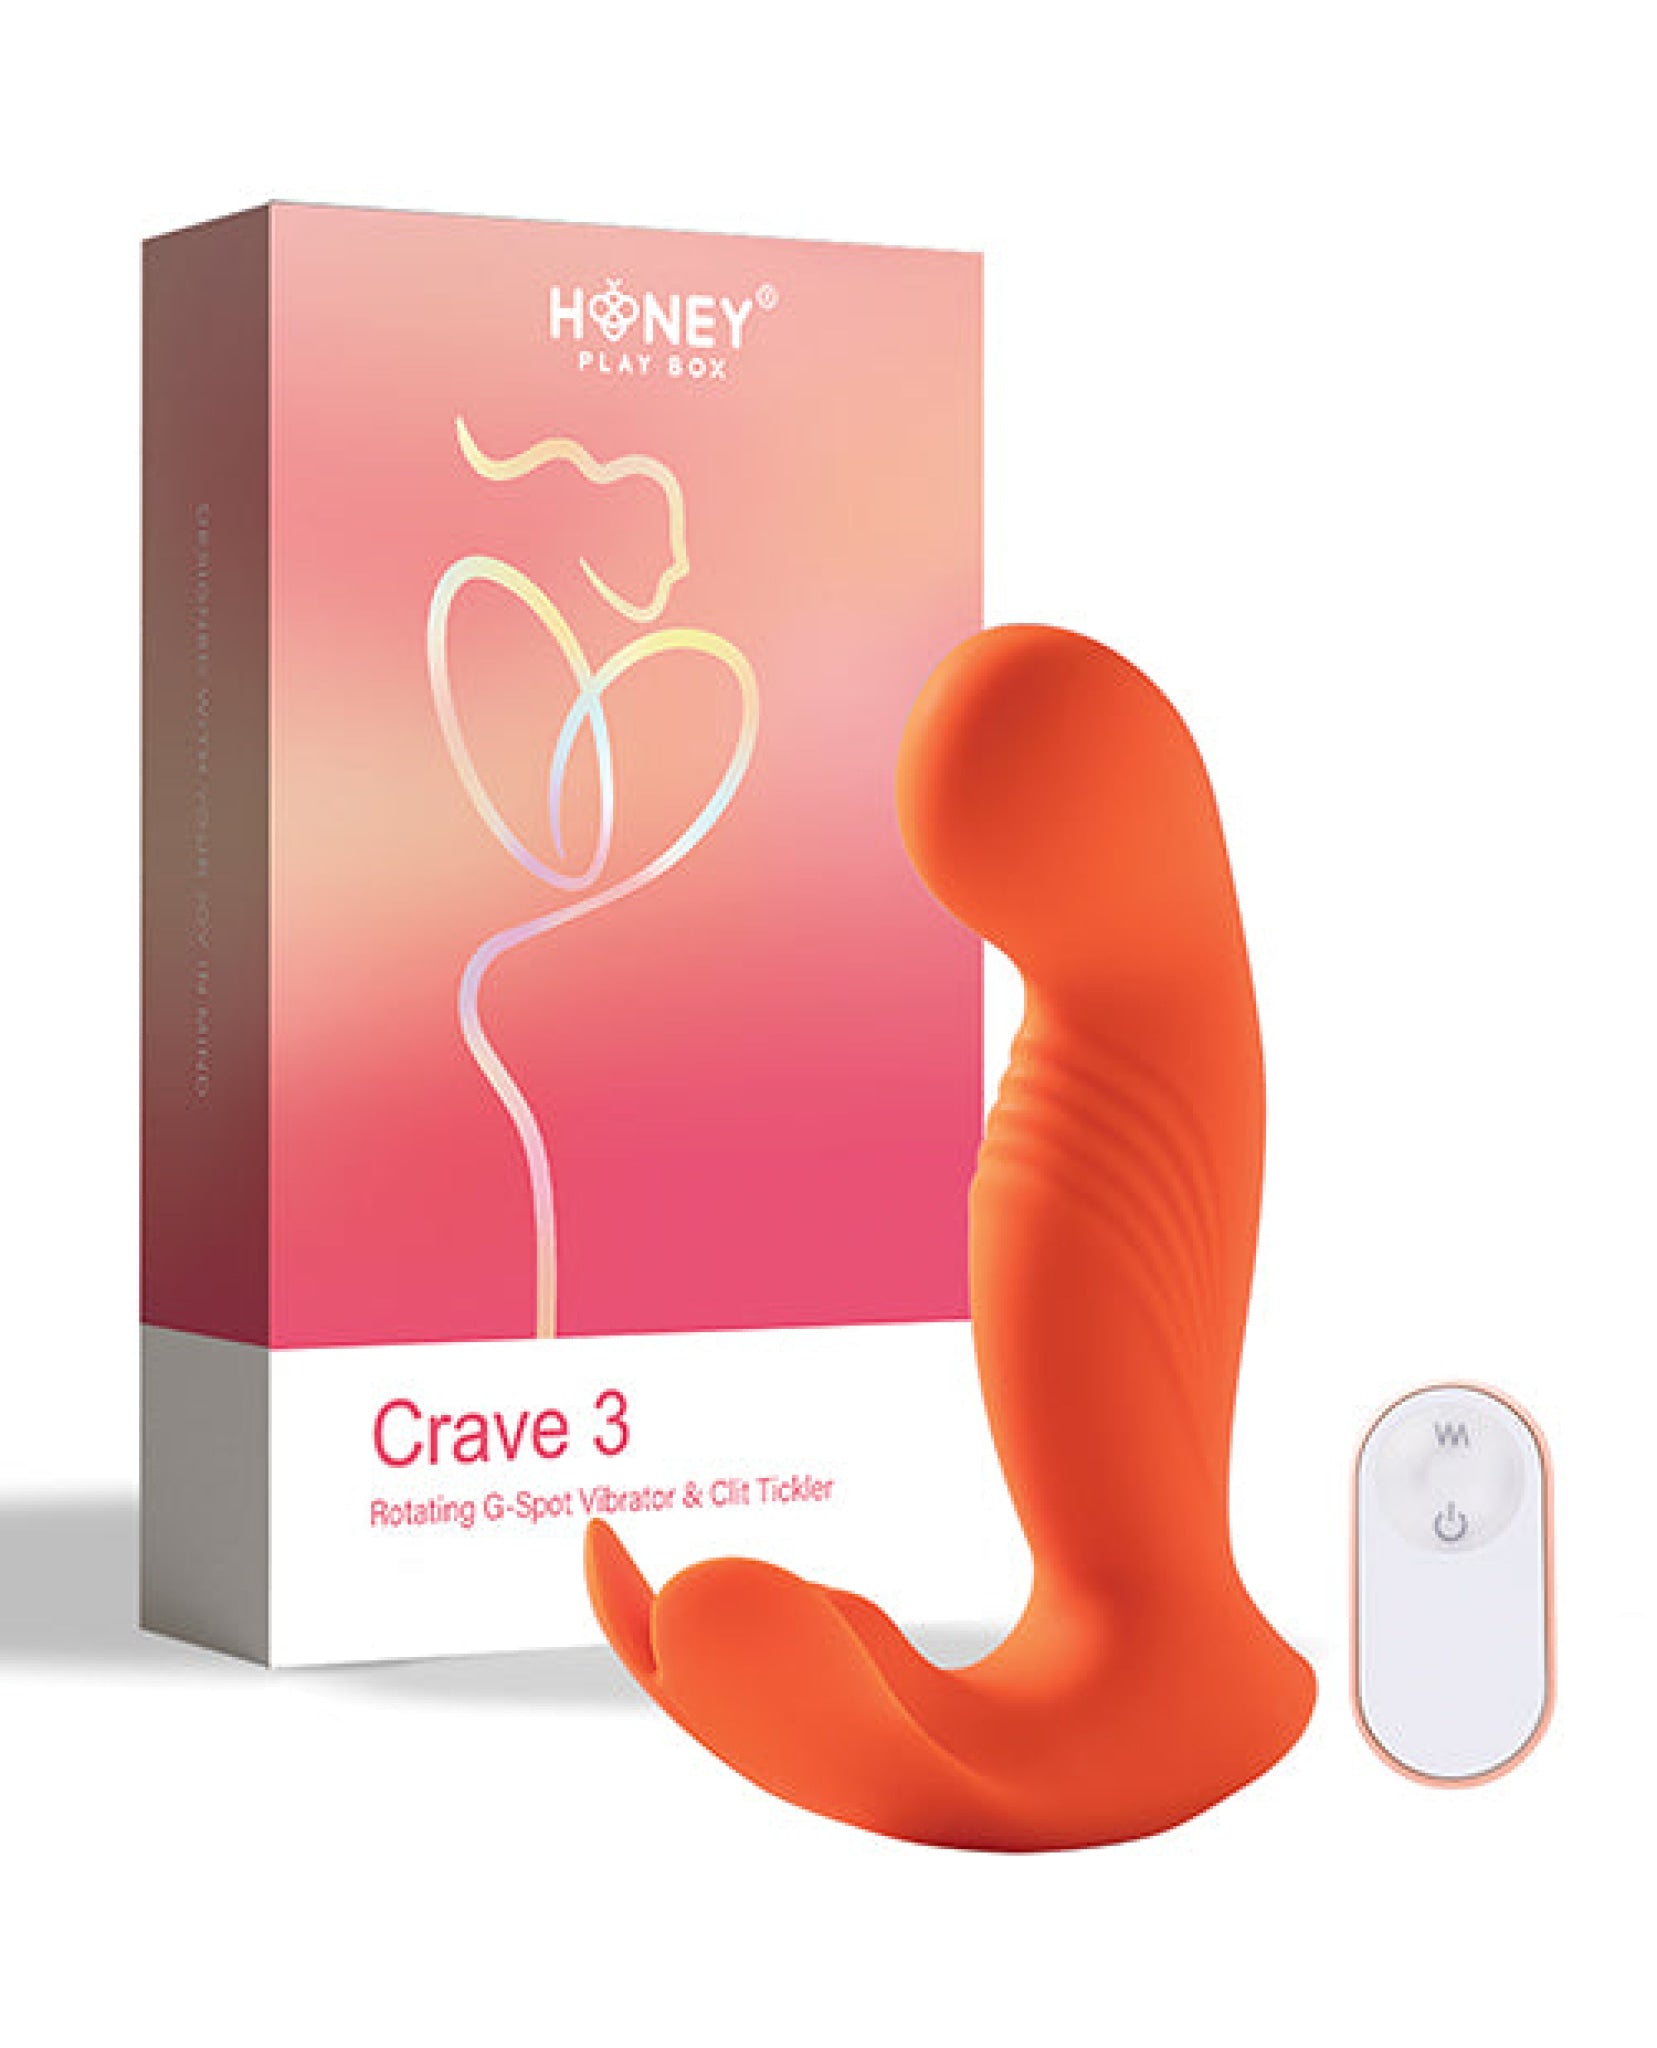 Crave 3 G-spot Vibrator With Rotating Massage Head & Clit Tickler - Orange Uc Global Trade